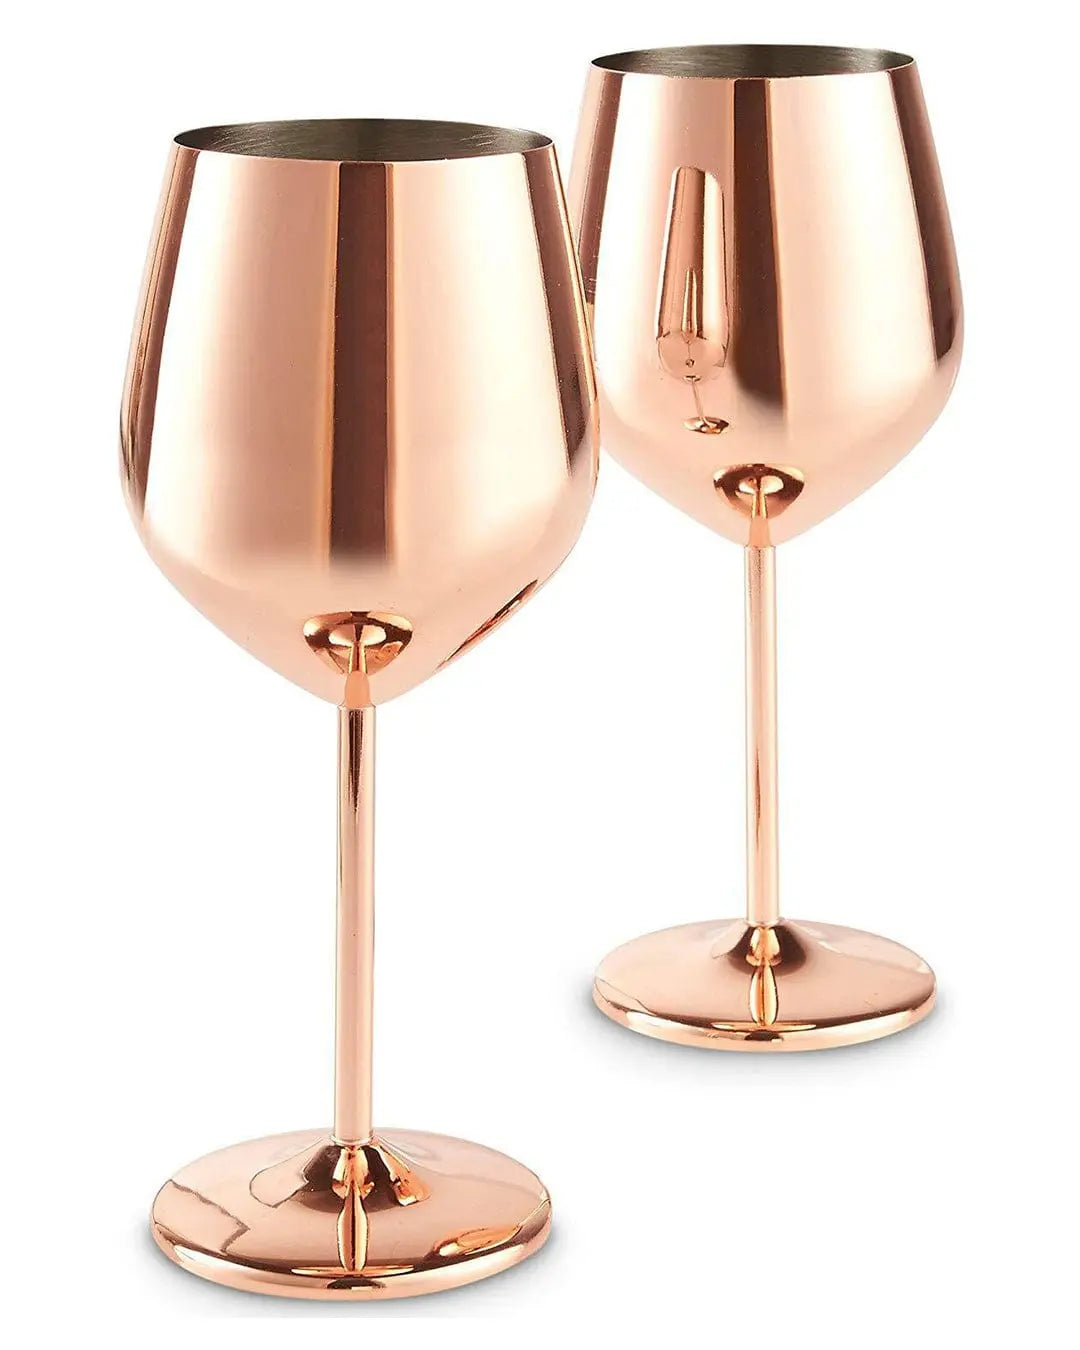 VonShef Copper Wine Glasses Tableware